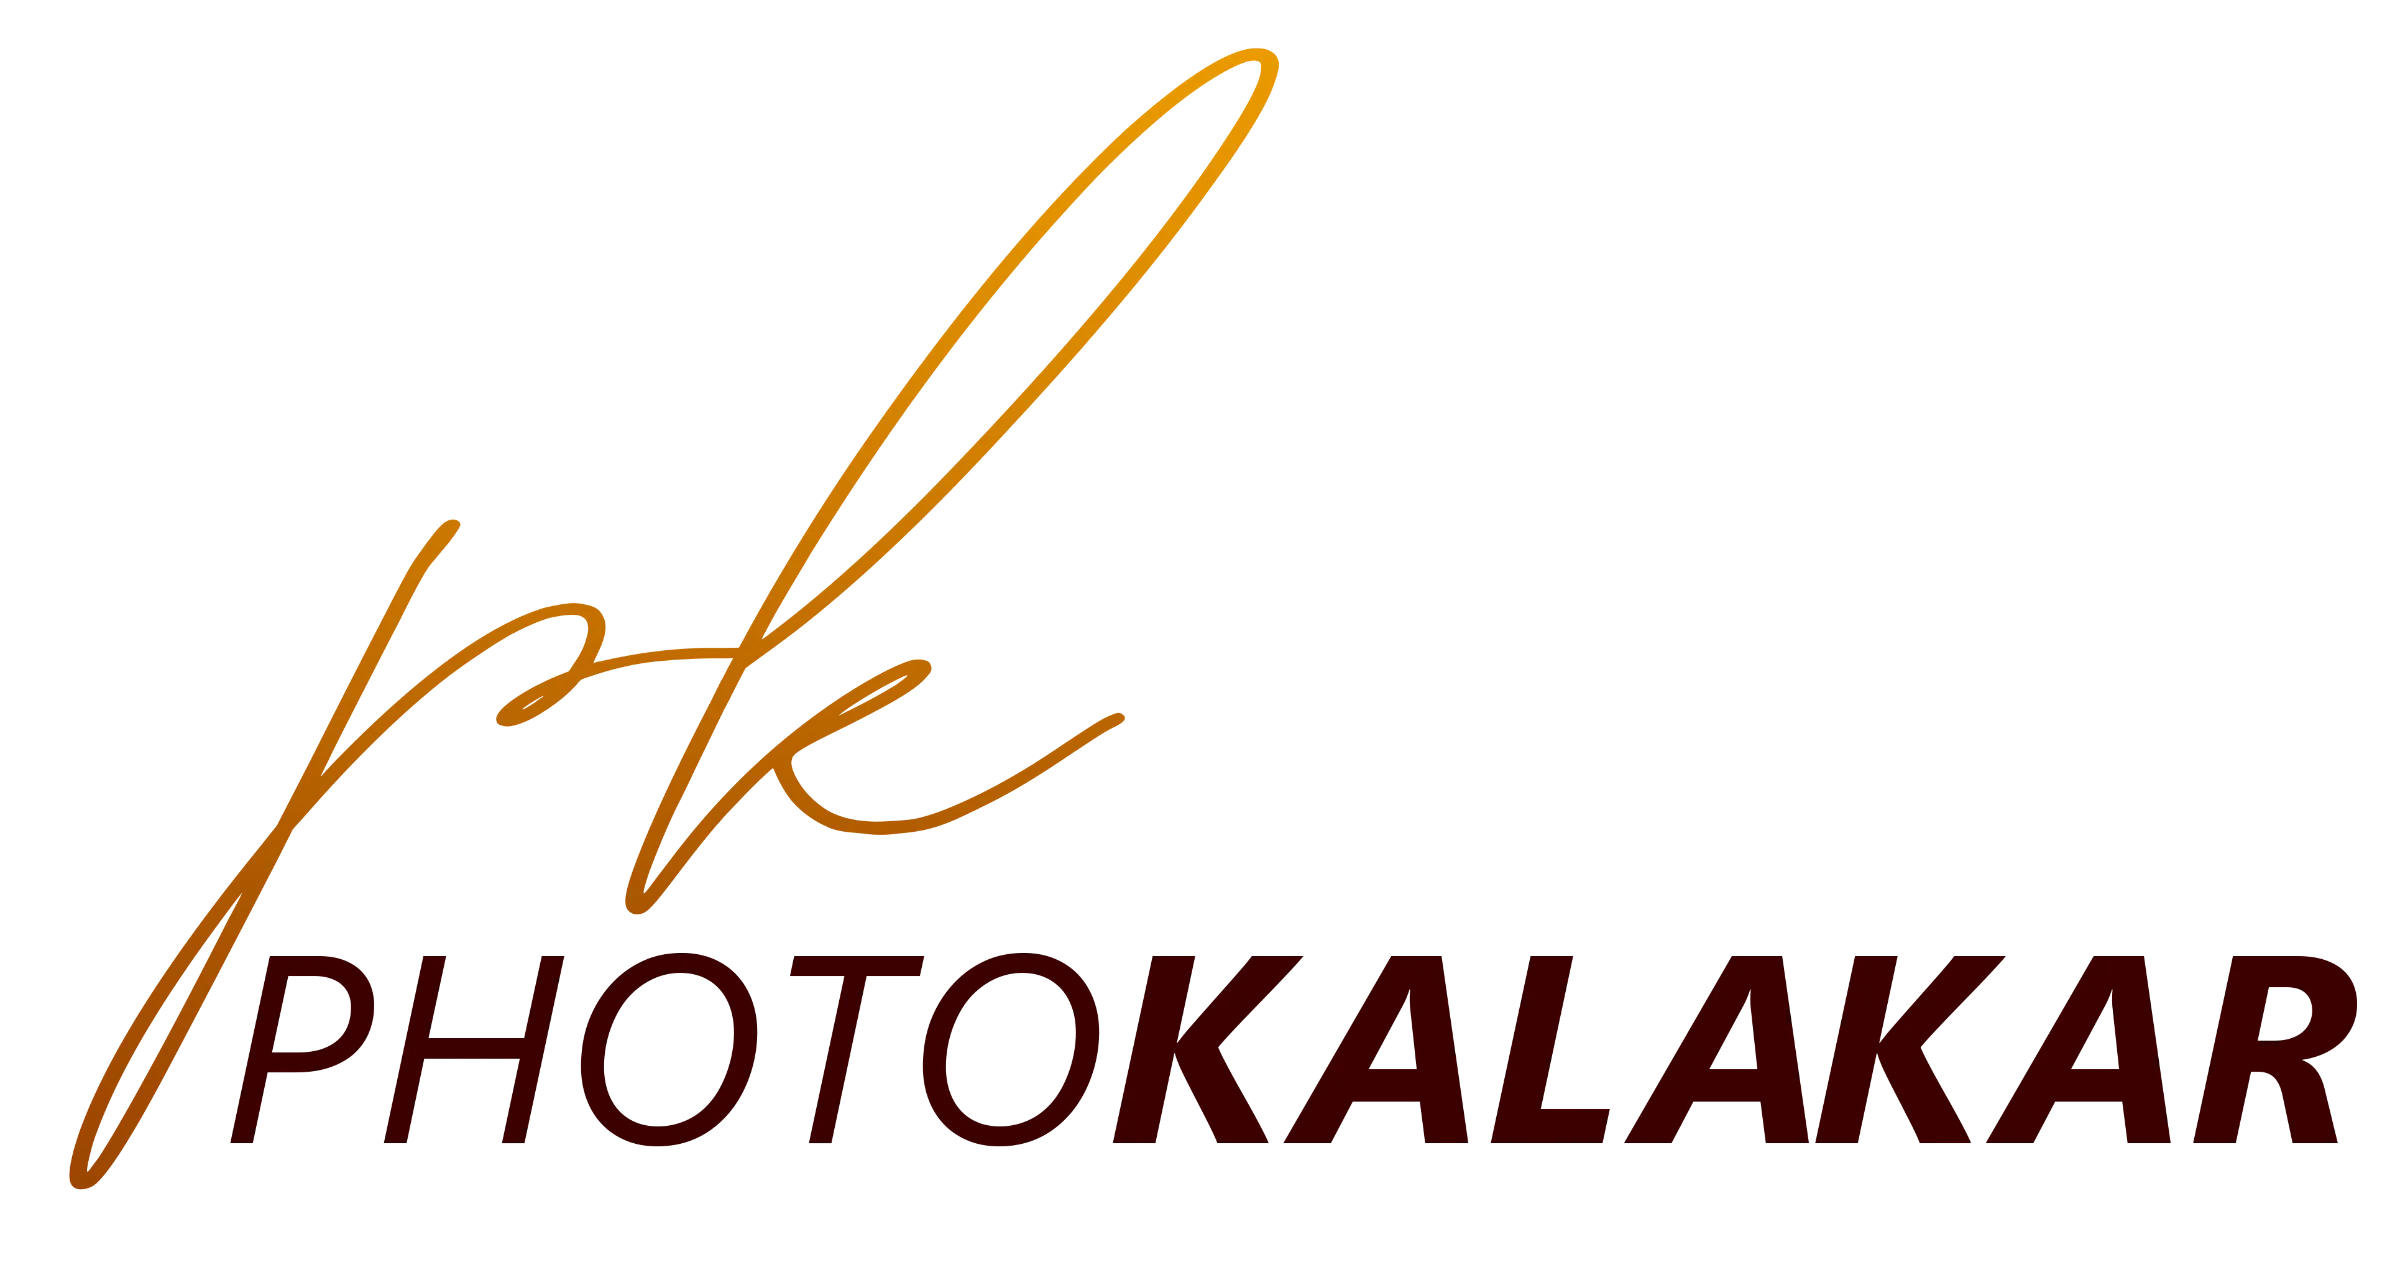 Photokalakar | Wedding Photography and Destination Wedding Photostudio